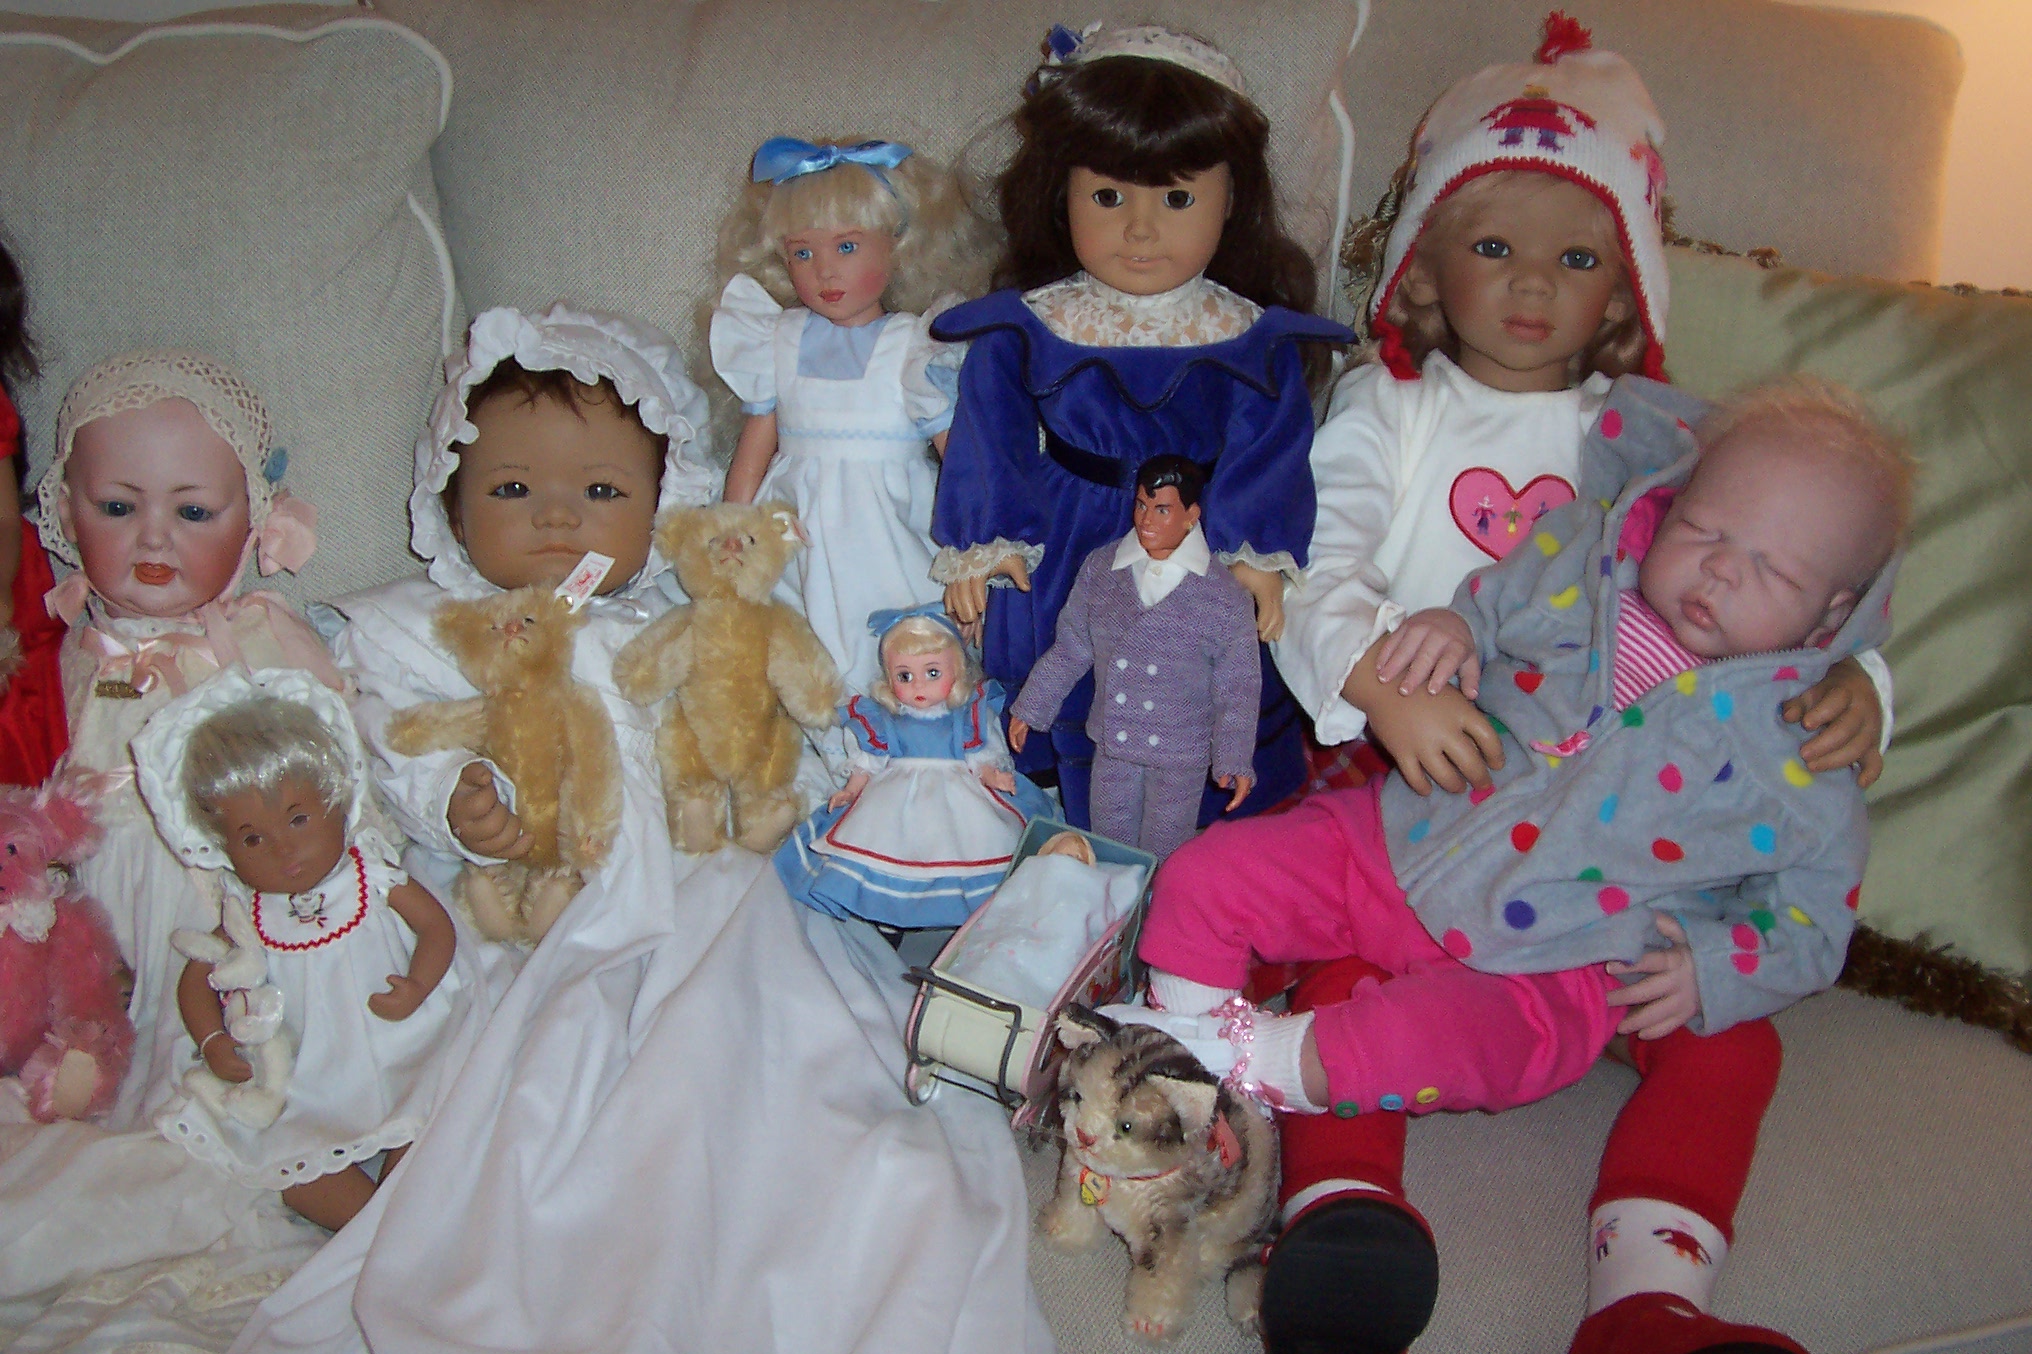 dolls.jpg